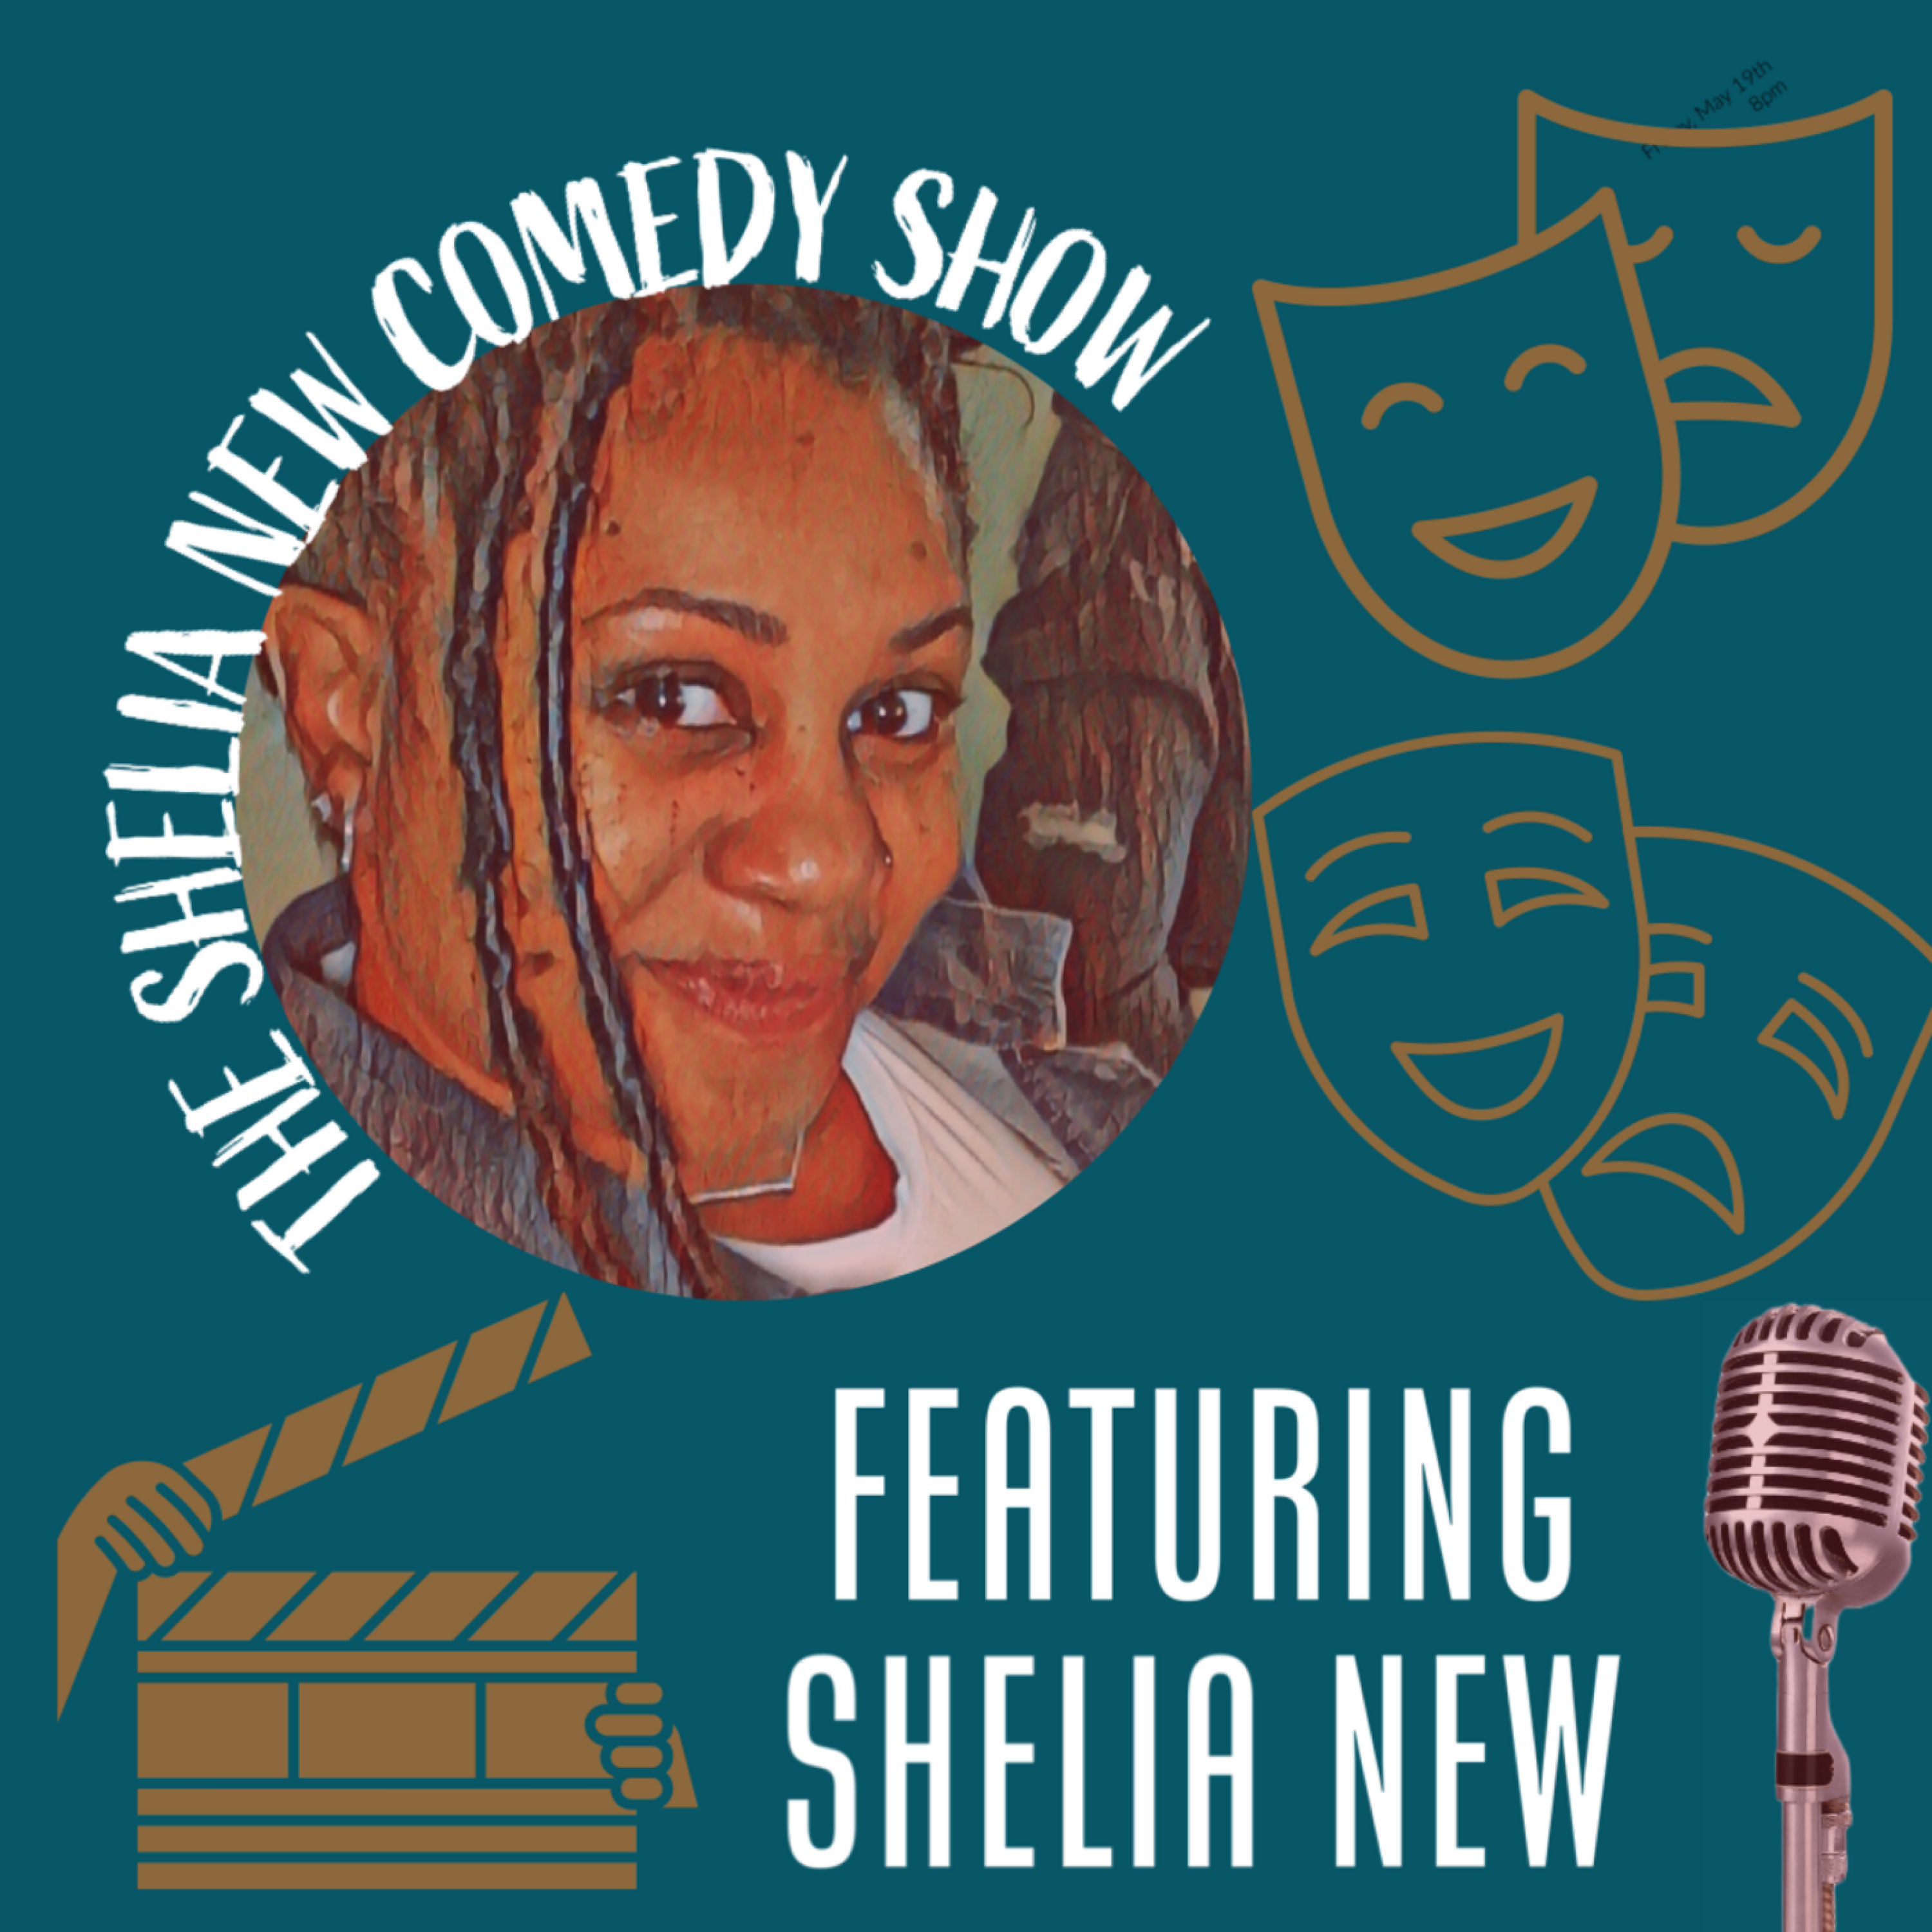 The Shelia New Comedy Show